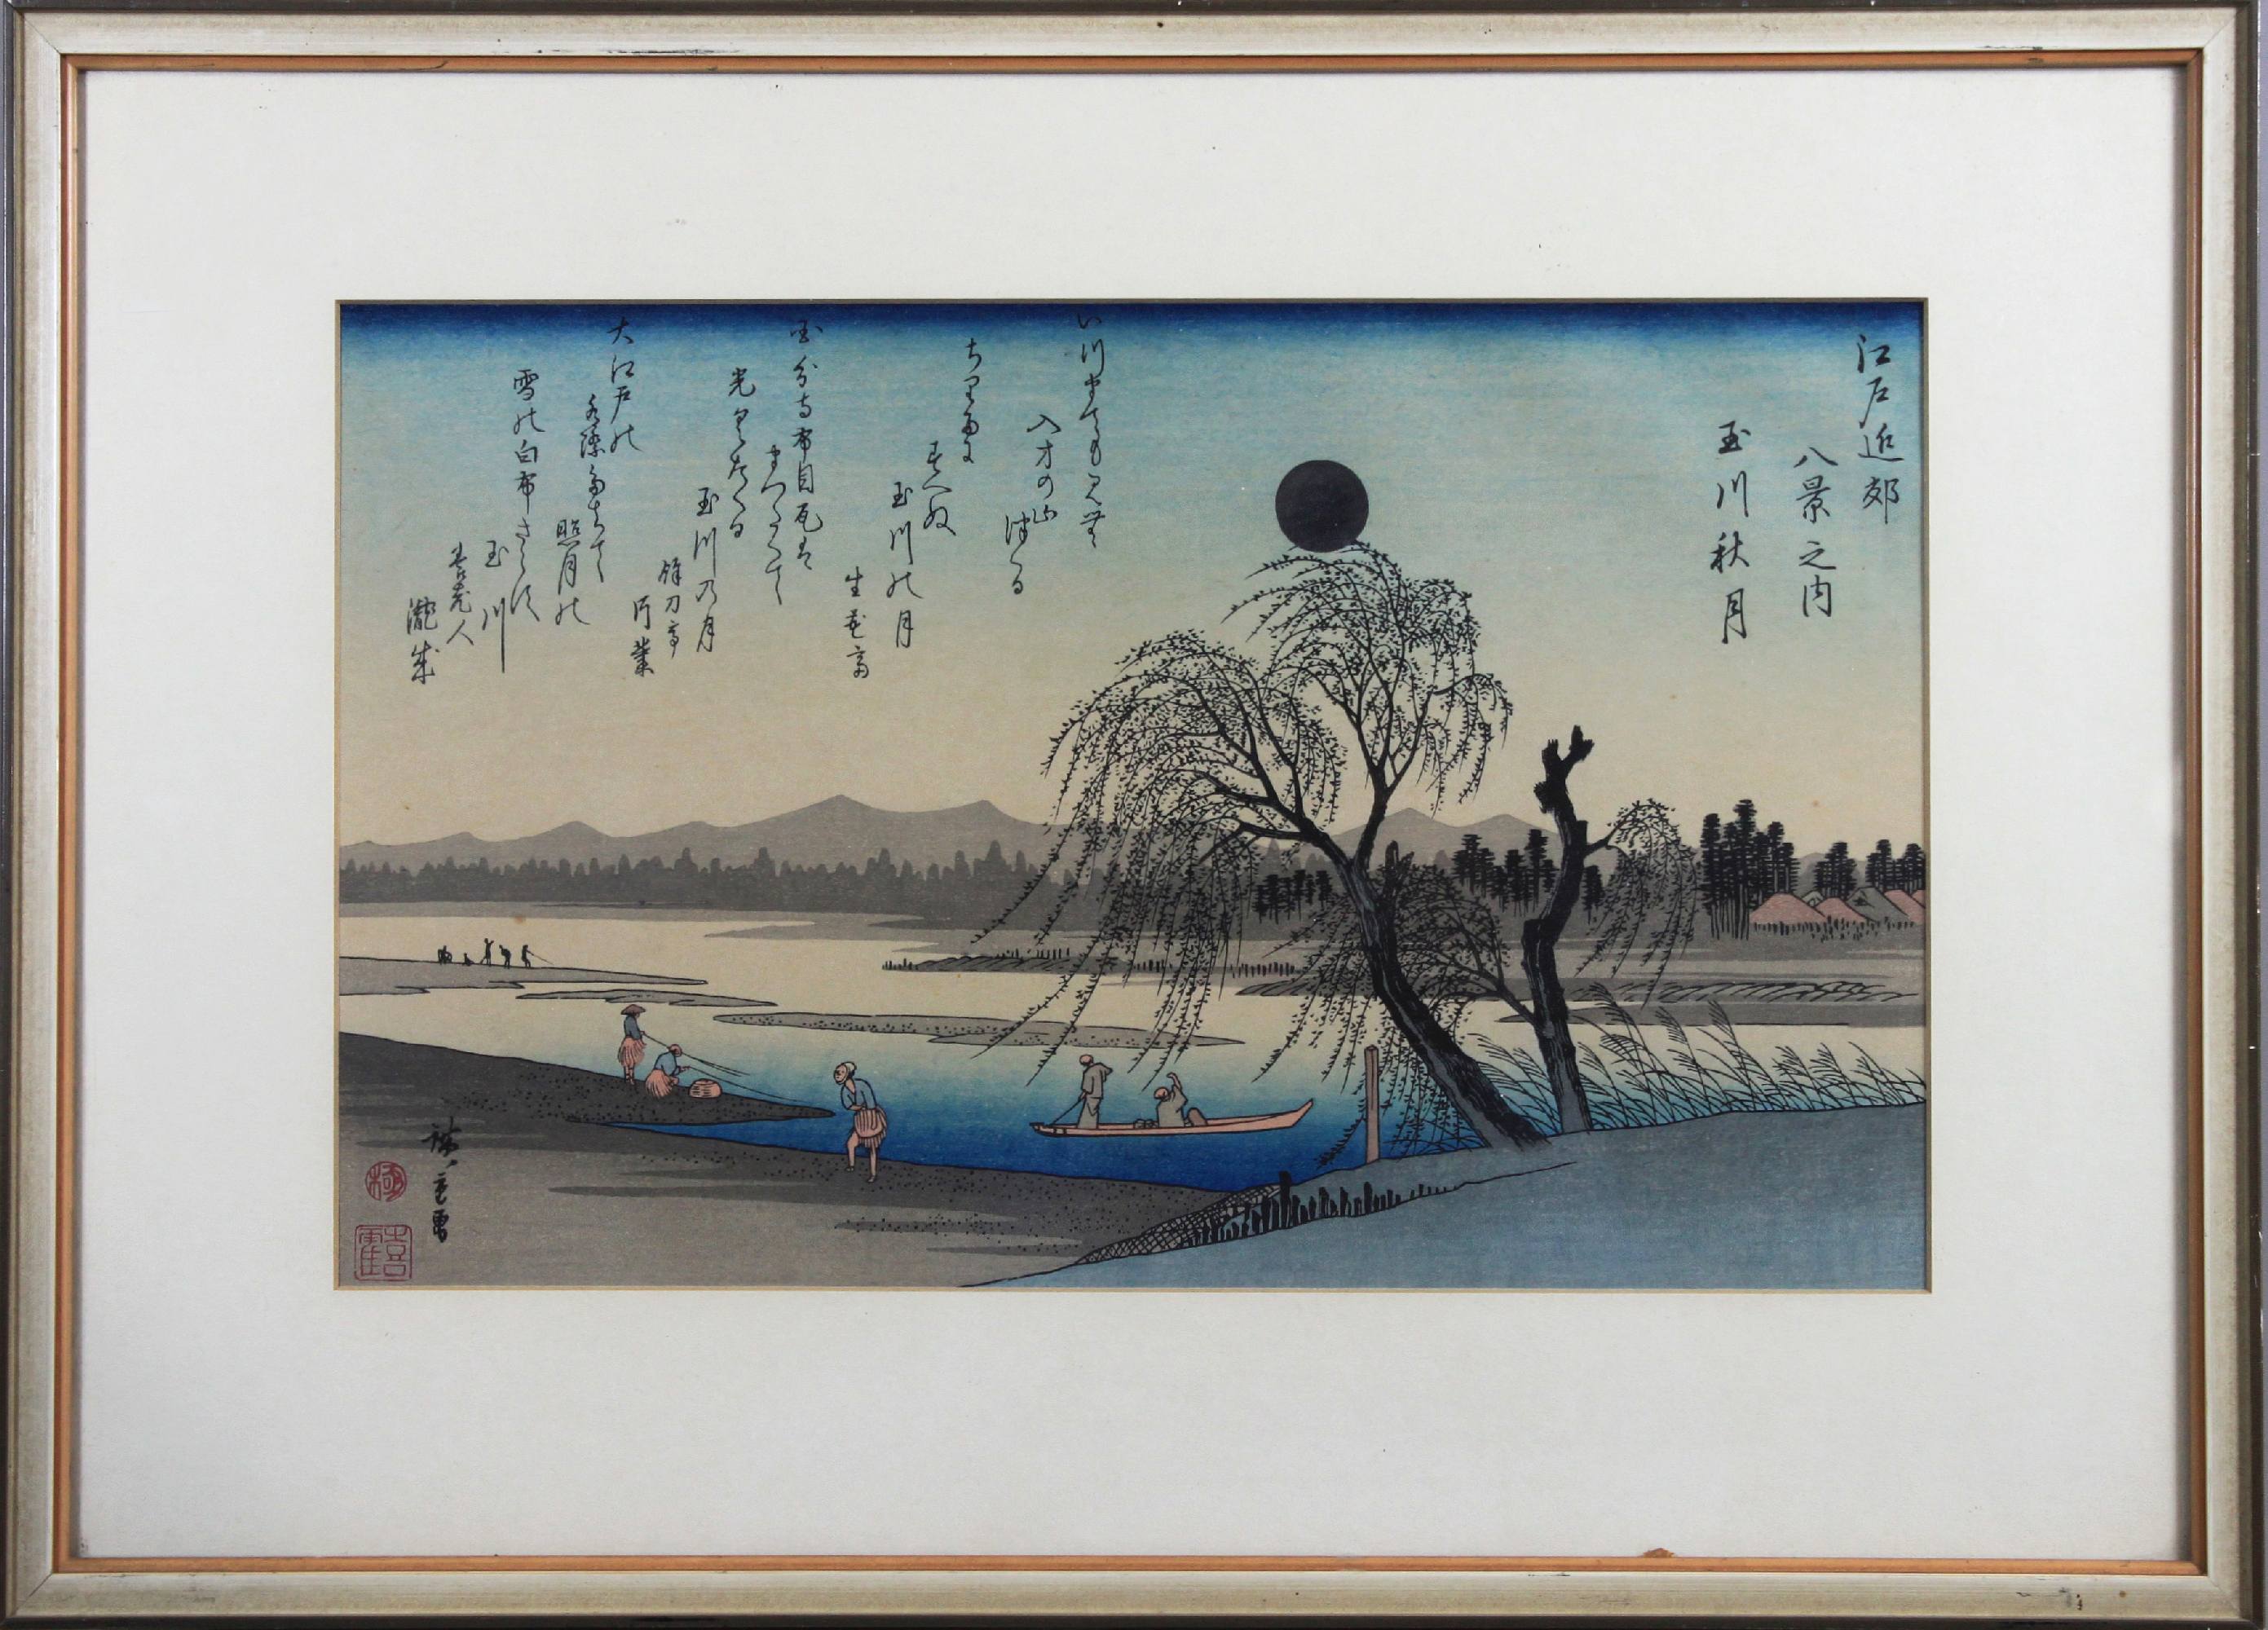 Utagawa Hiroshige (1797-1858), Farbholzschnitt